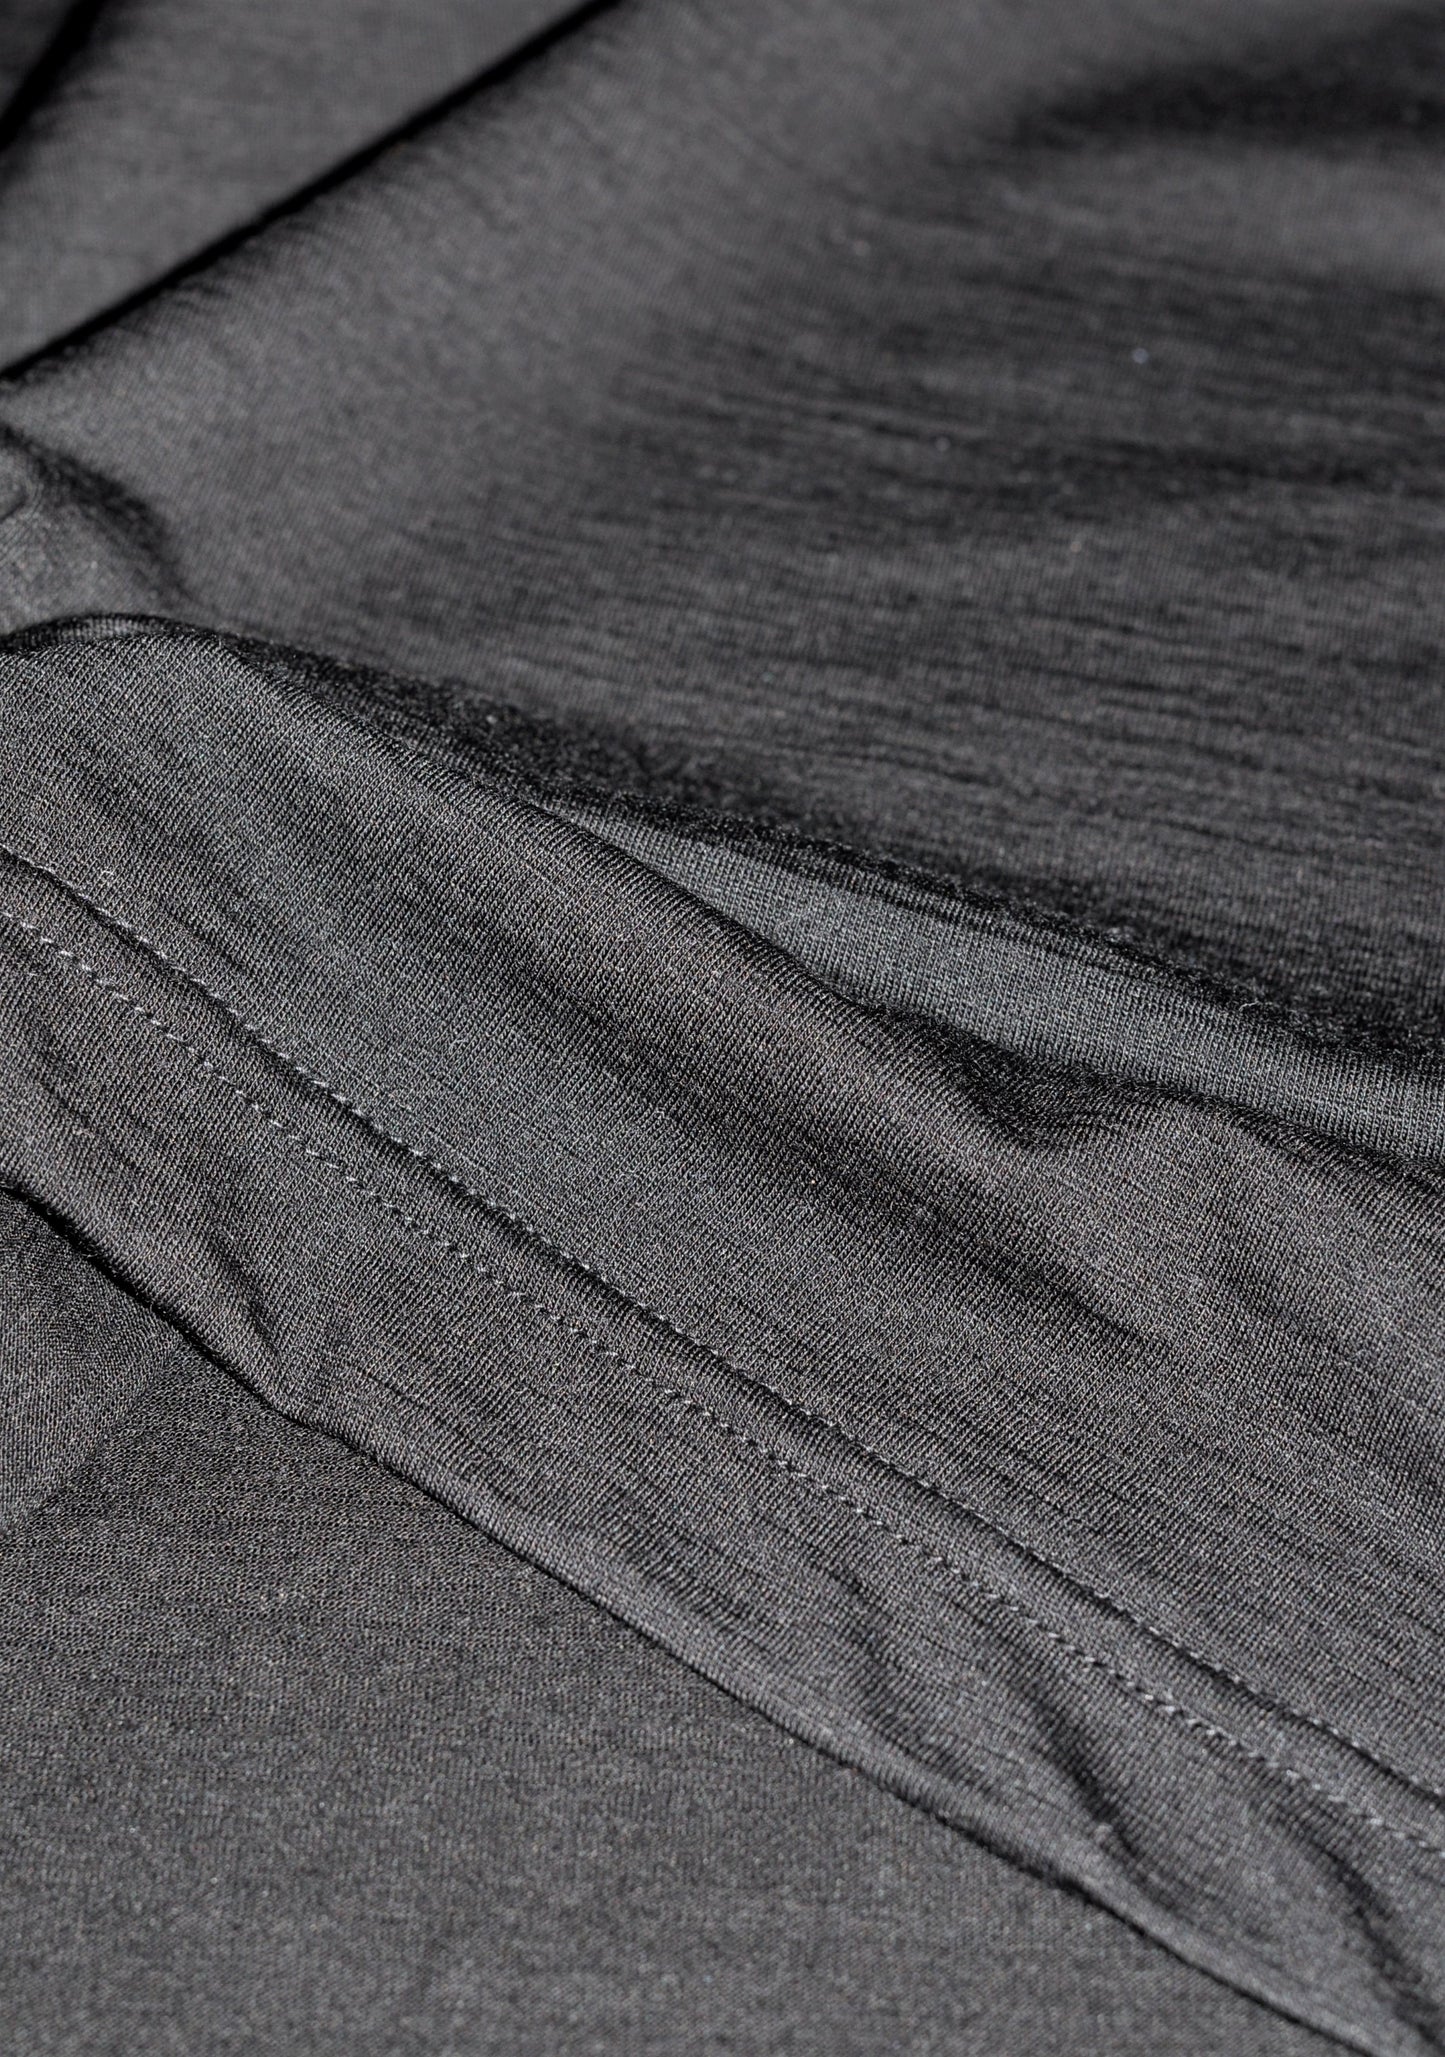 Closeup of black merino jersey